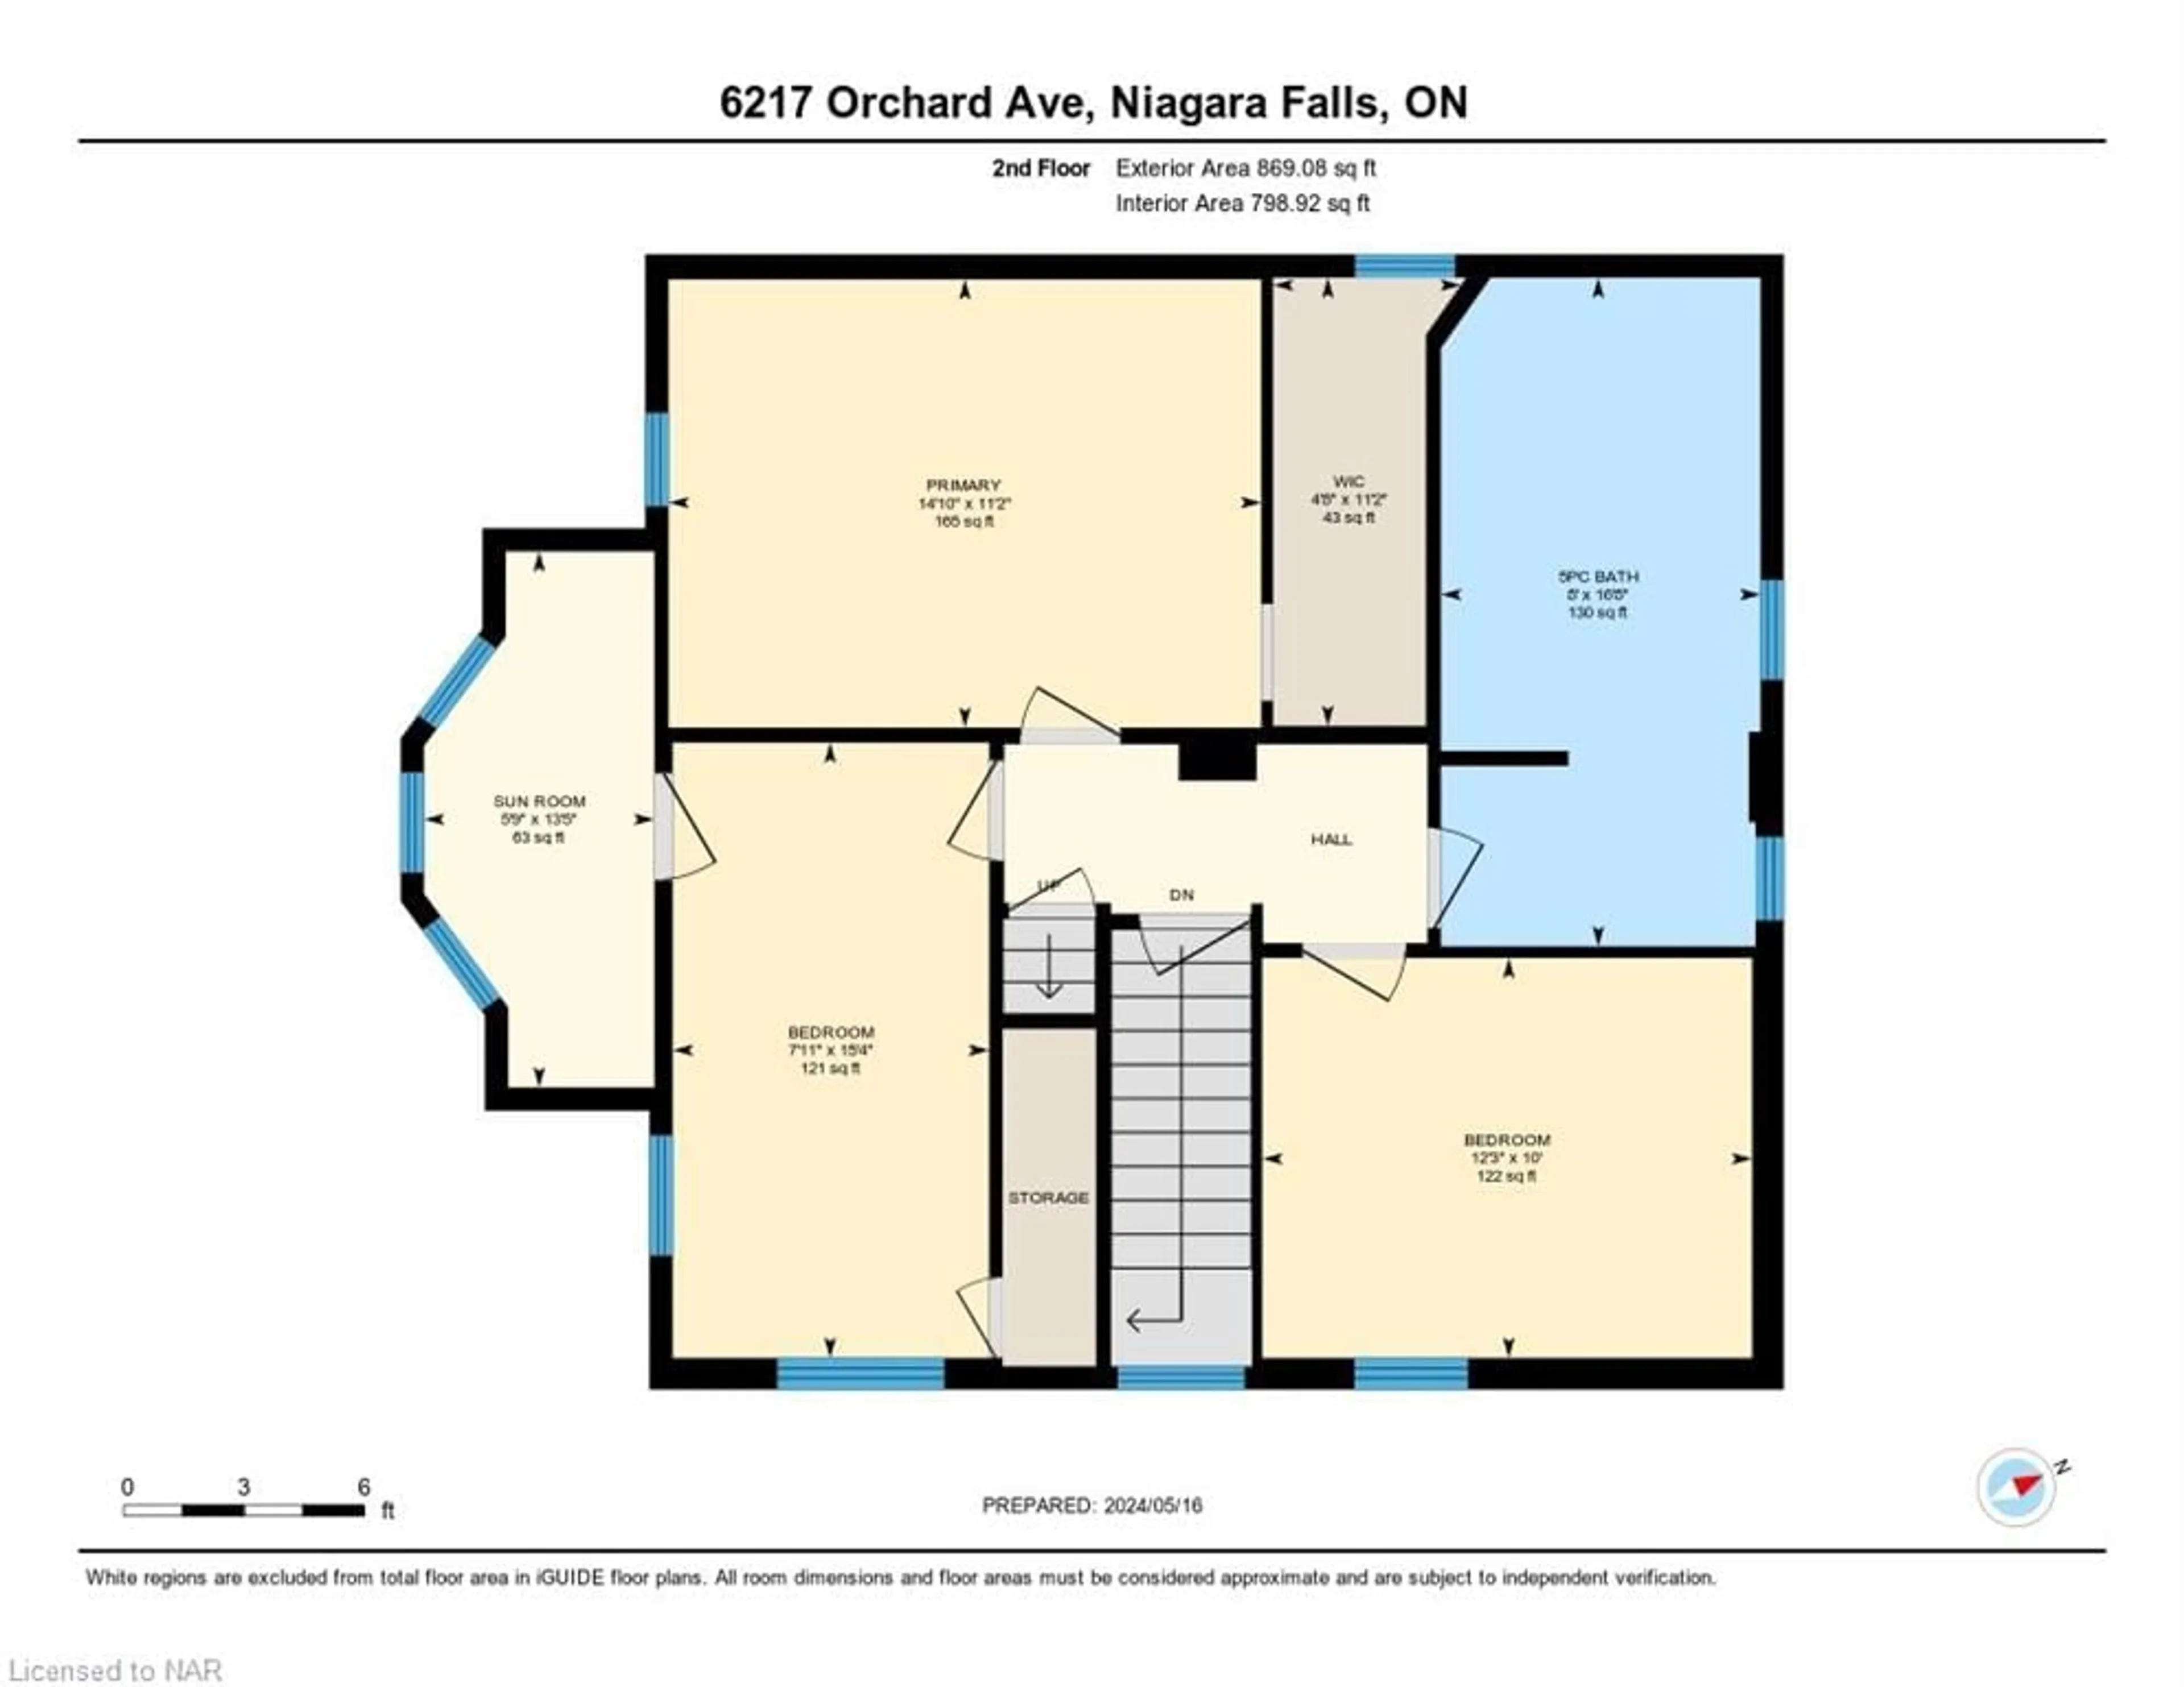 Floor plan for 6217 Orchard Ave, Niagara Falls Ontario L2G 4G7